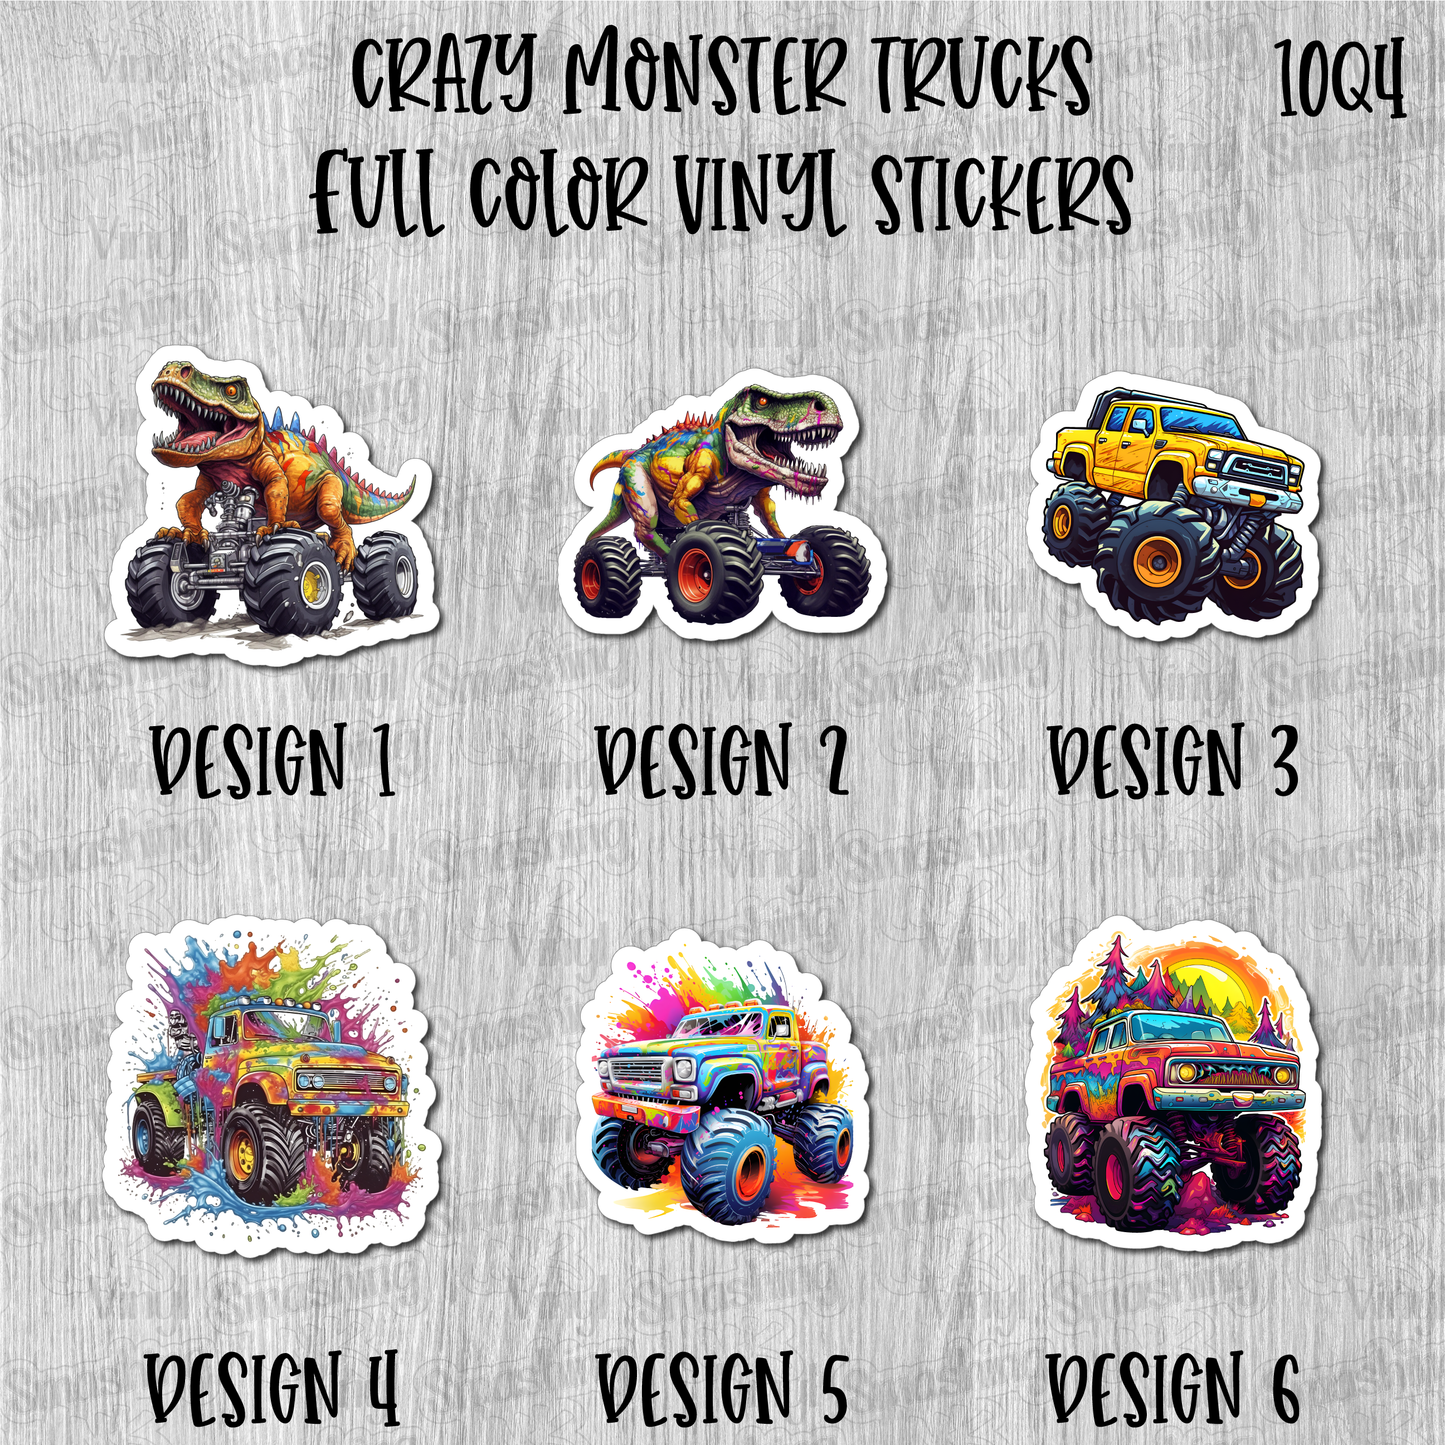 Crazy Monster Trucks - Full Color Vinyl Stickers (SHIPS IN 3-7 BUS DAYS)